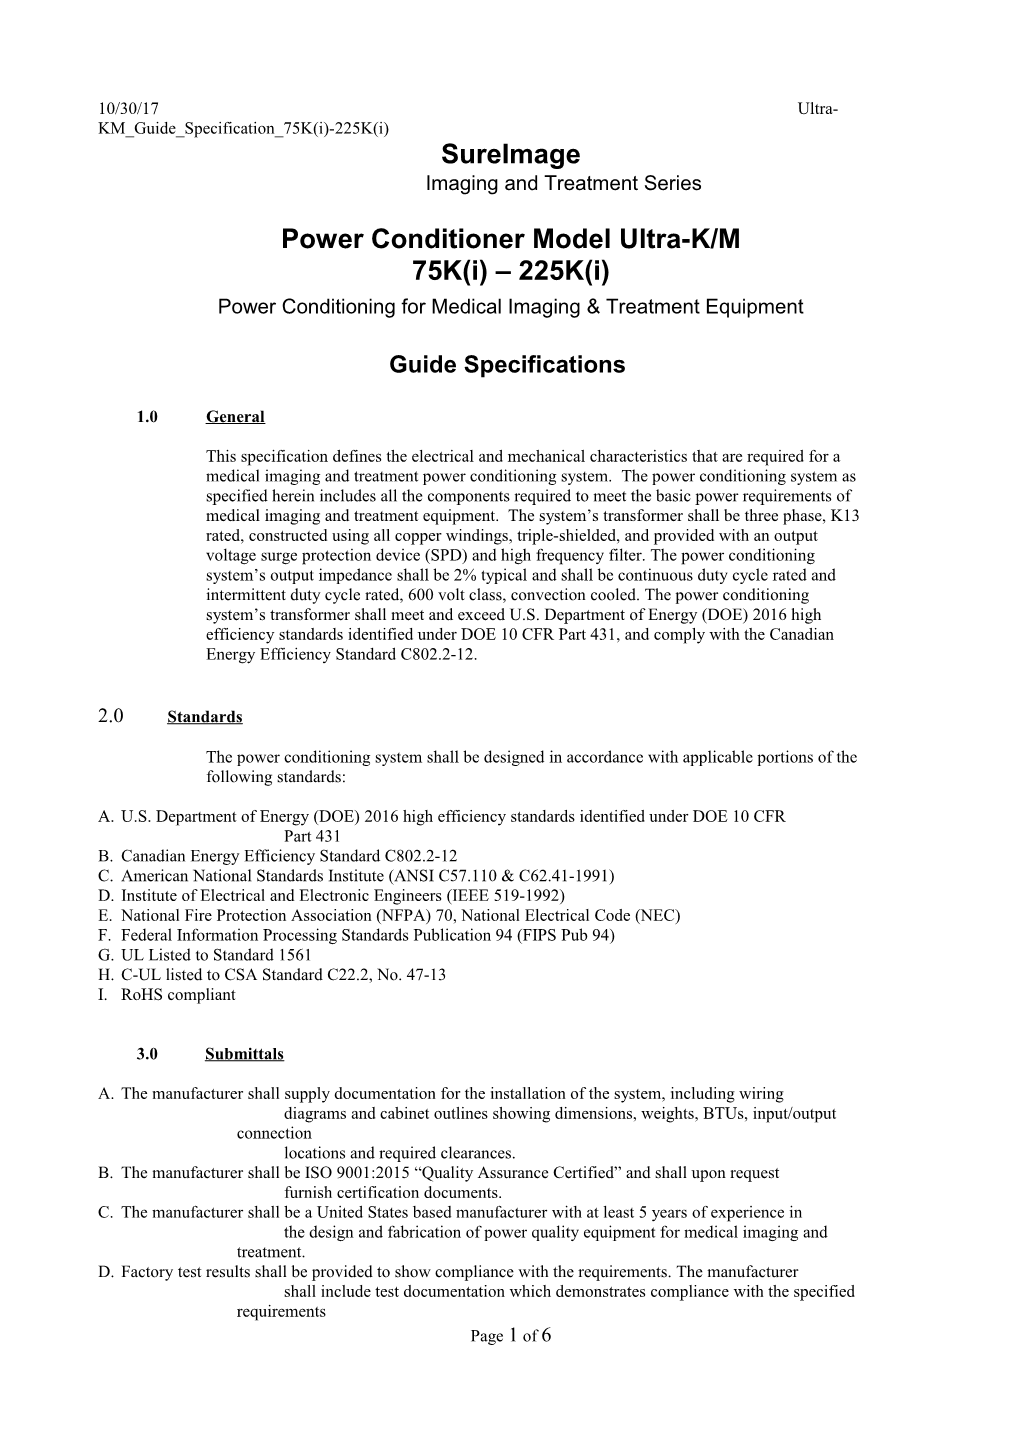 Power Conditioner Model Ultra-K/M